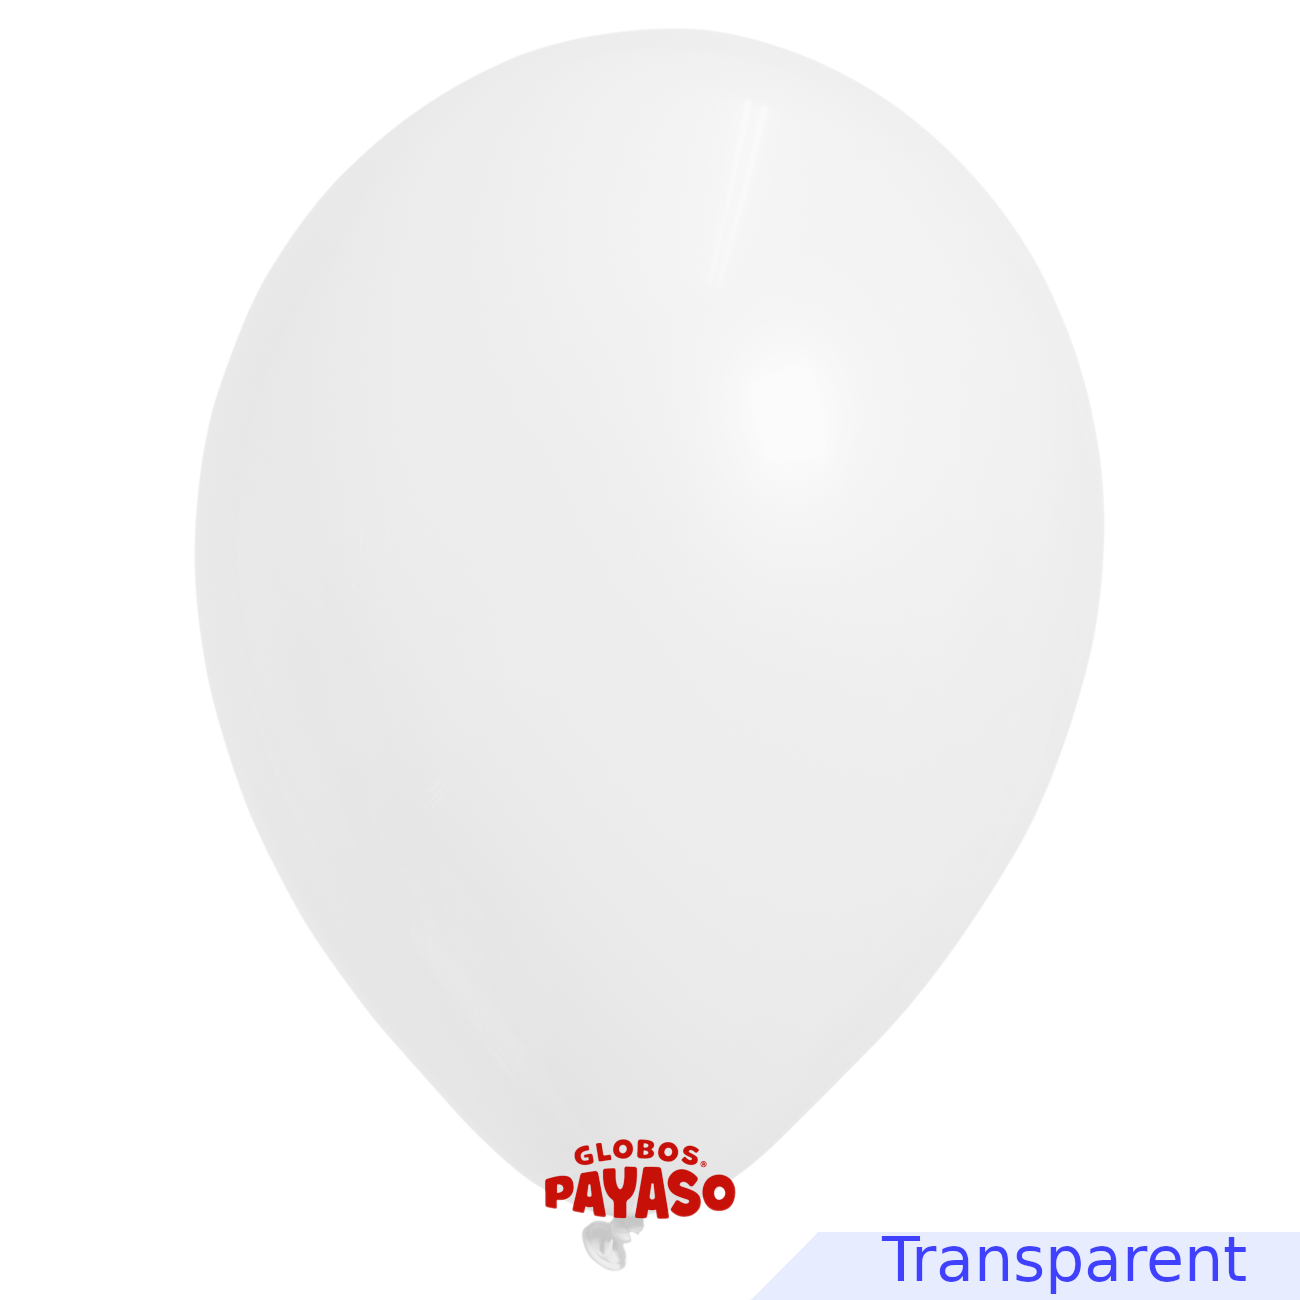 Globos Payaso / Unique 24" Clear Translucid Decorator Balloon